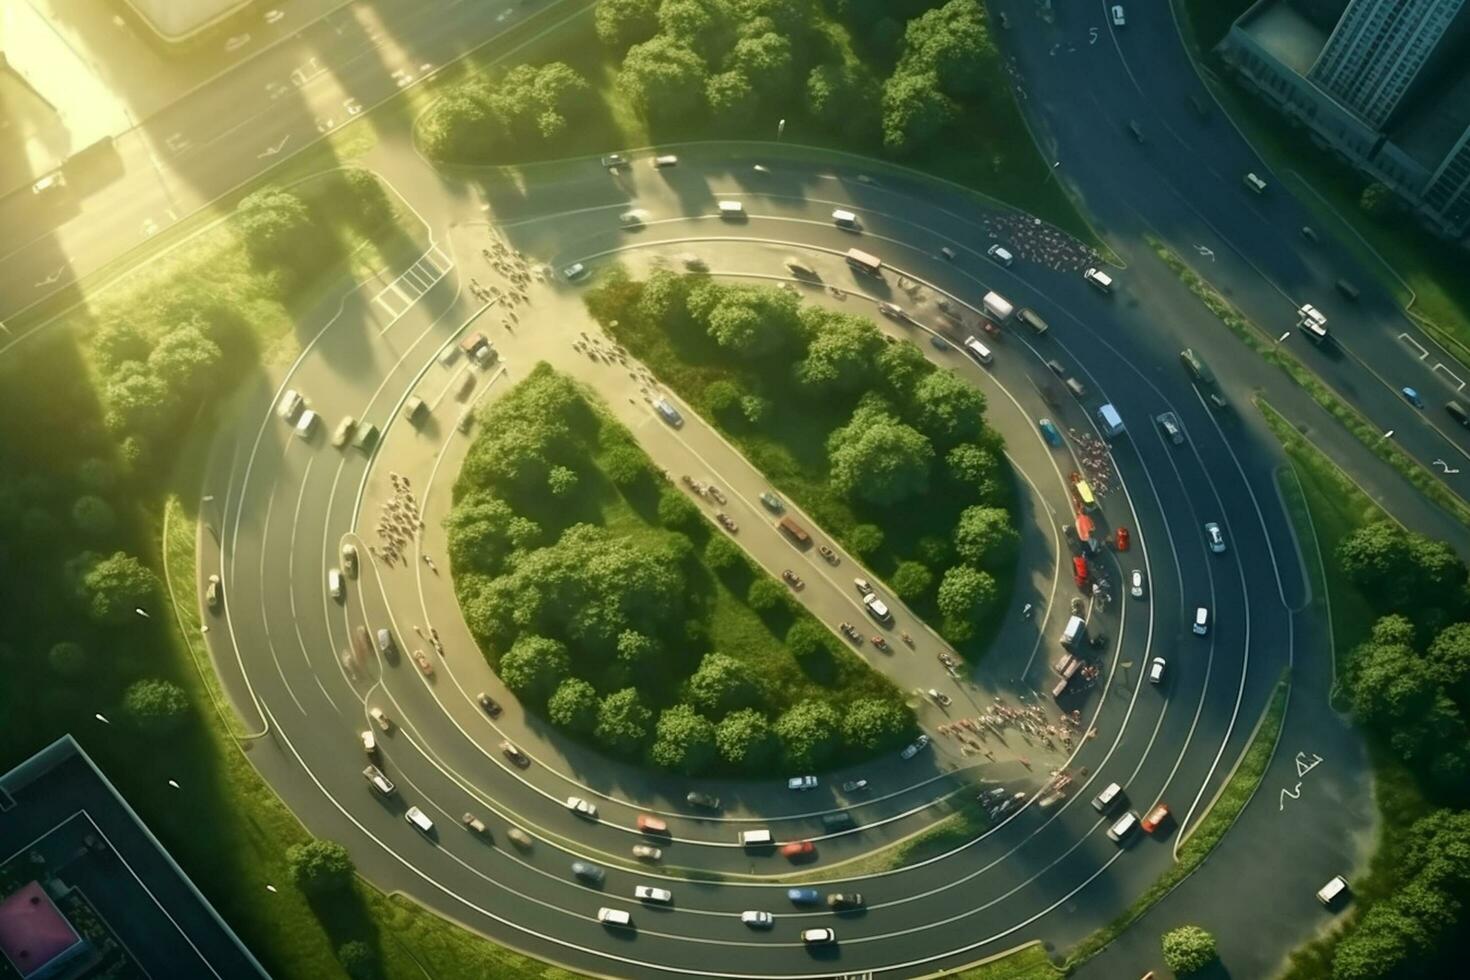 antenn topp se av en rondell i de mitten av en grön stad foto